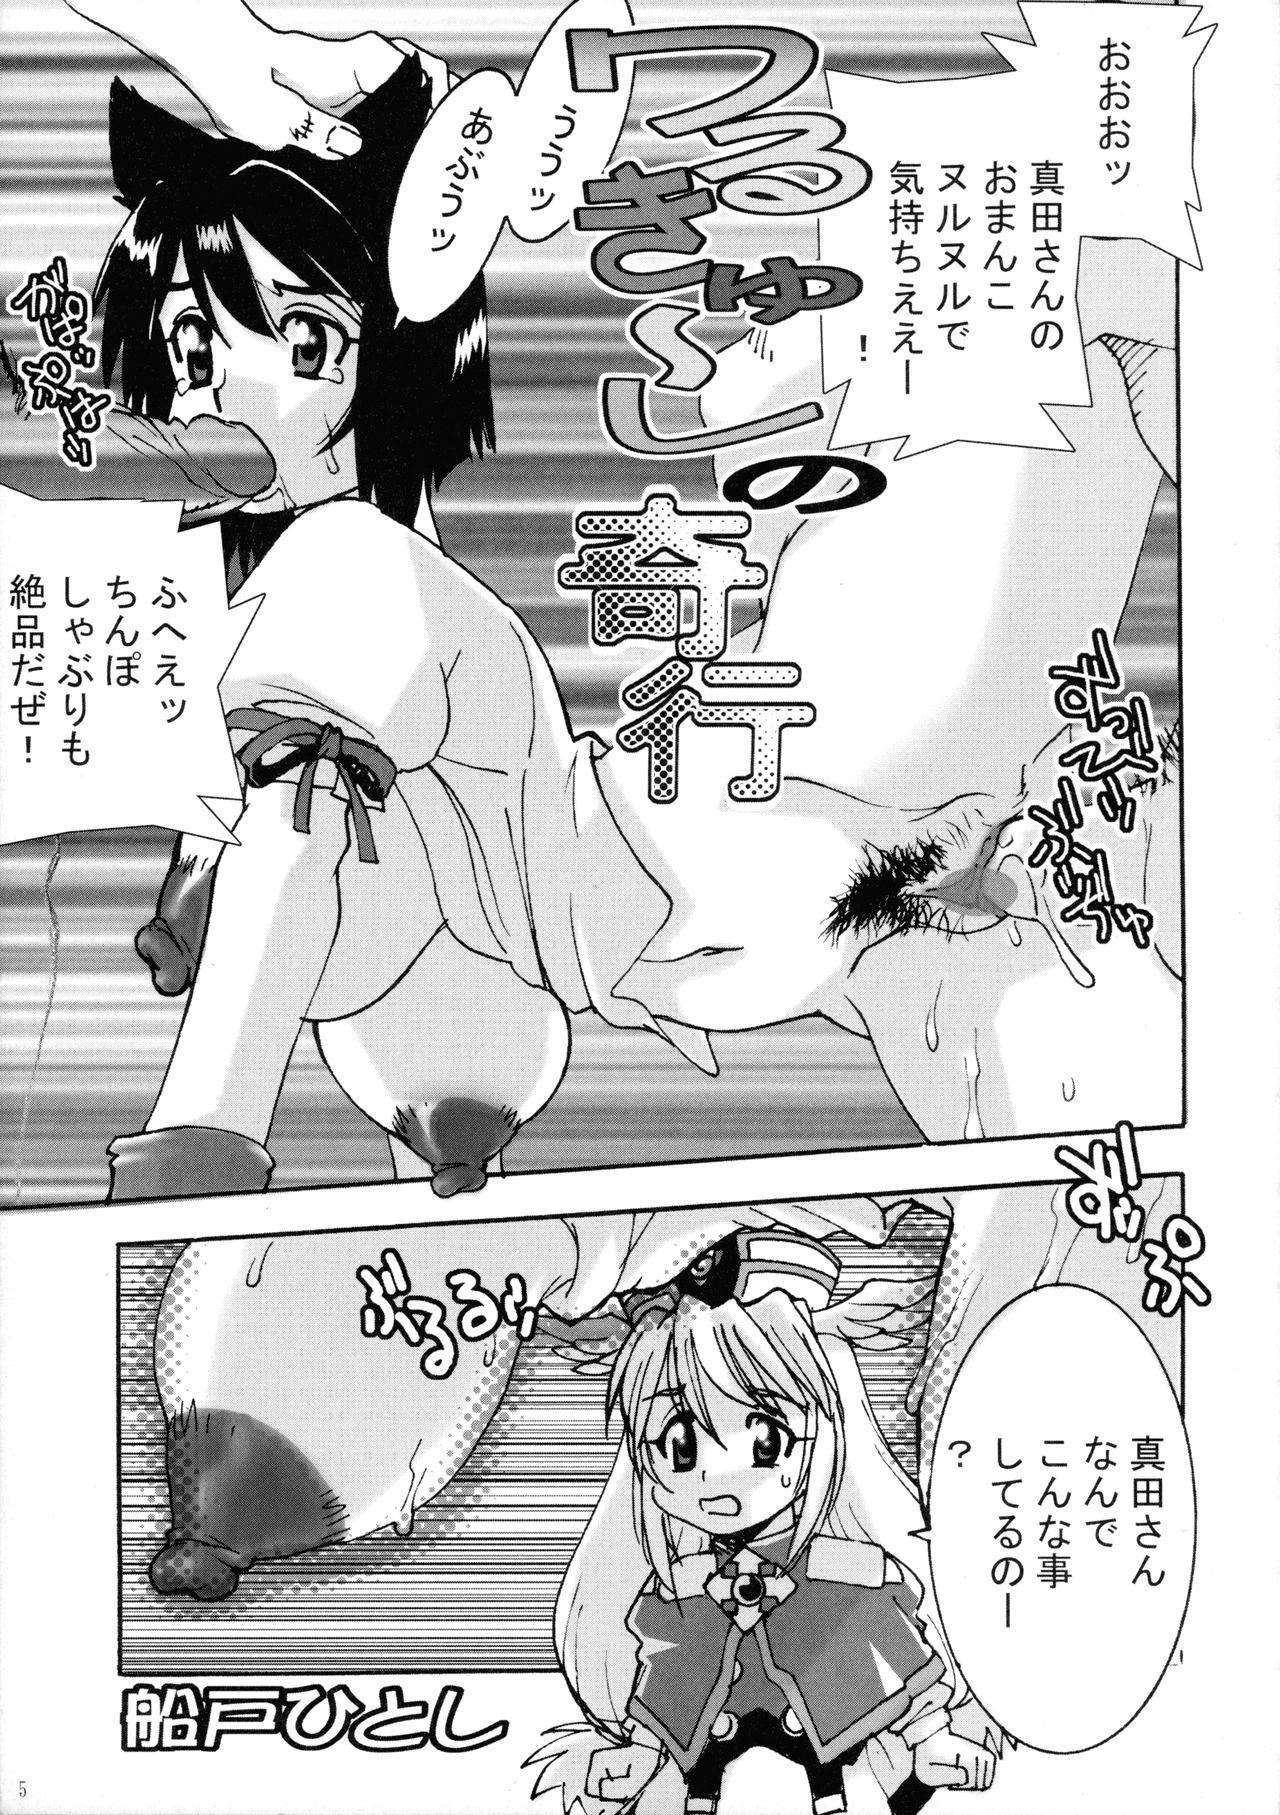 Female Shin Hanajuuroku VIII - Naruto One piece Bleach Kochikame Ufo princess valkyrie Cocksucking - Page 5